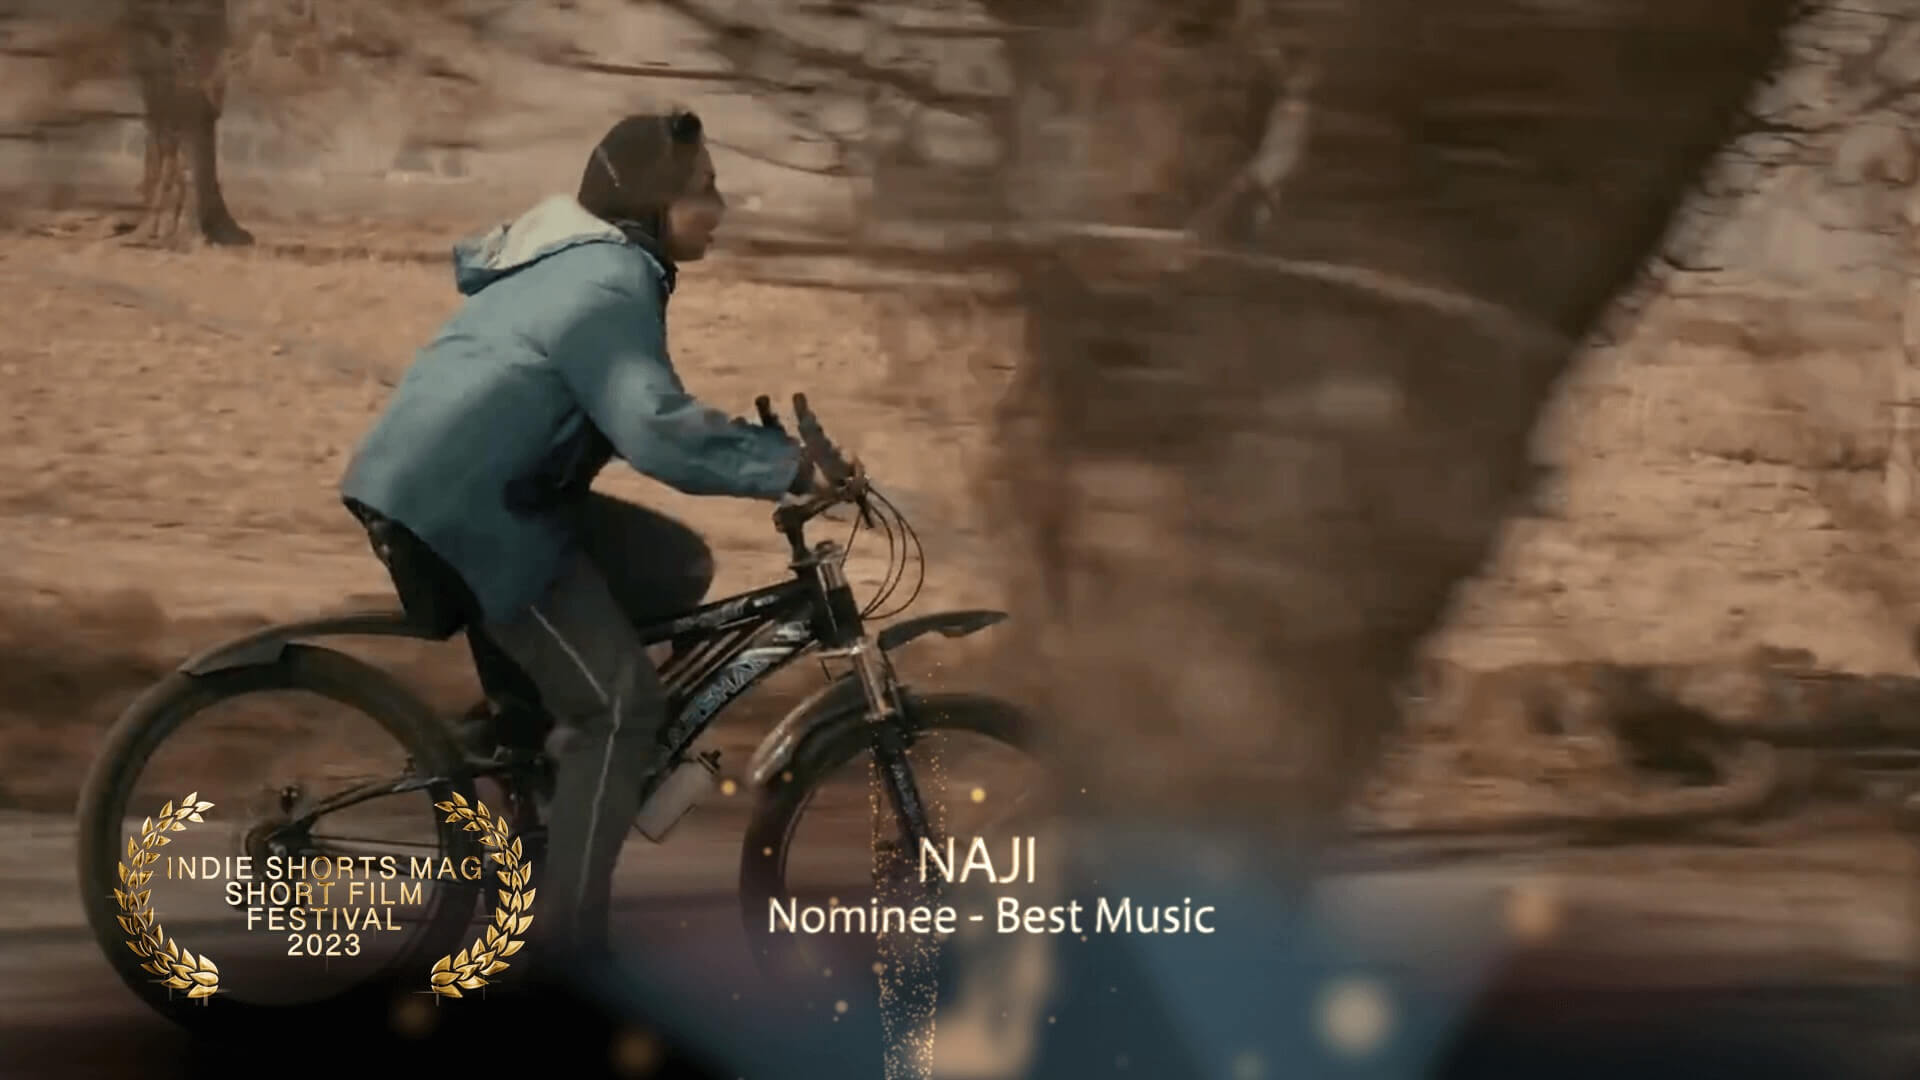 Indie Shorts Mag Short Film Festival - Best Music - Nominee - Naji